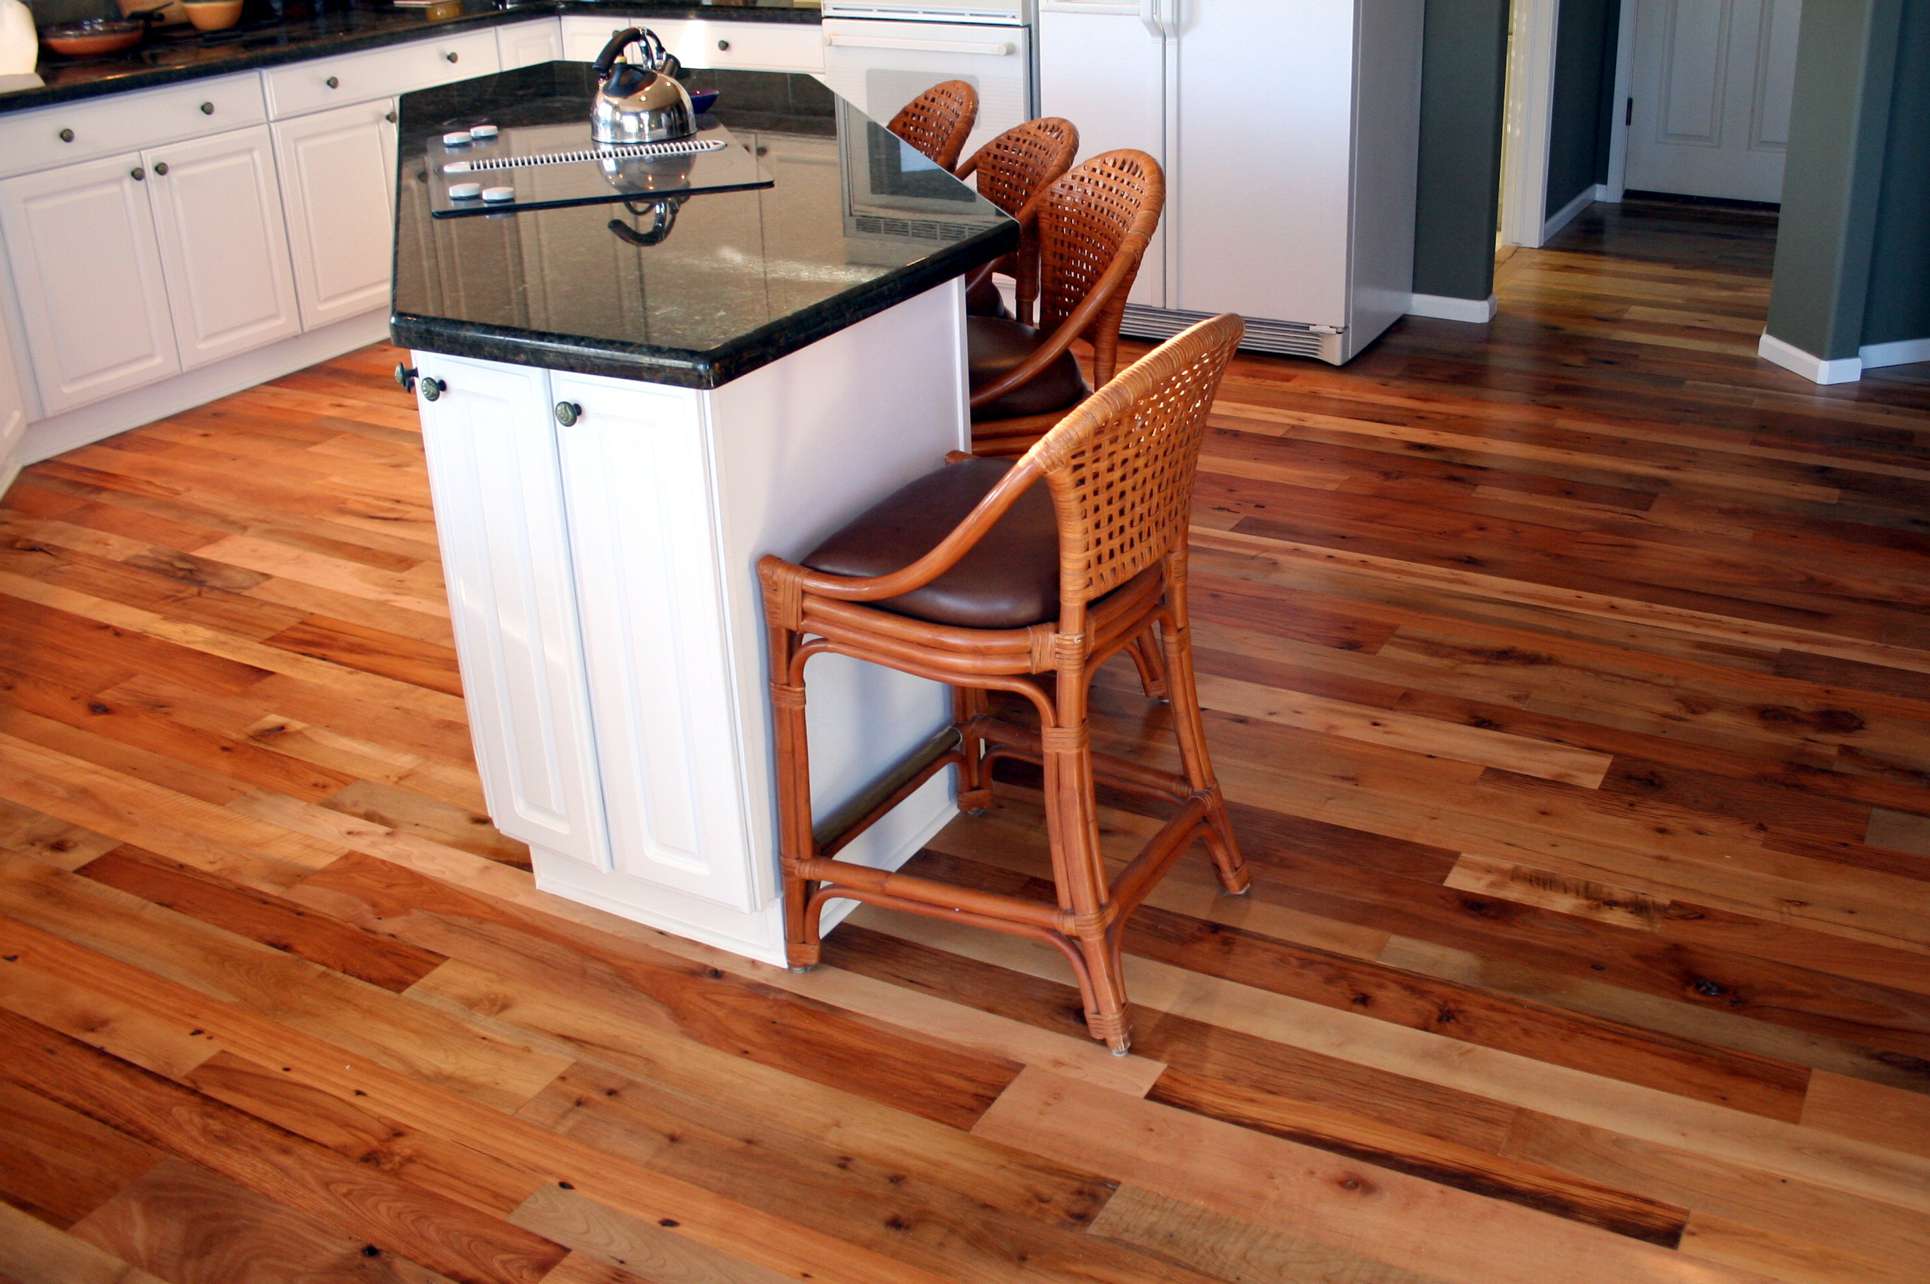 Hardwood floors in your kitchen